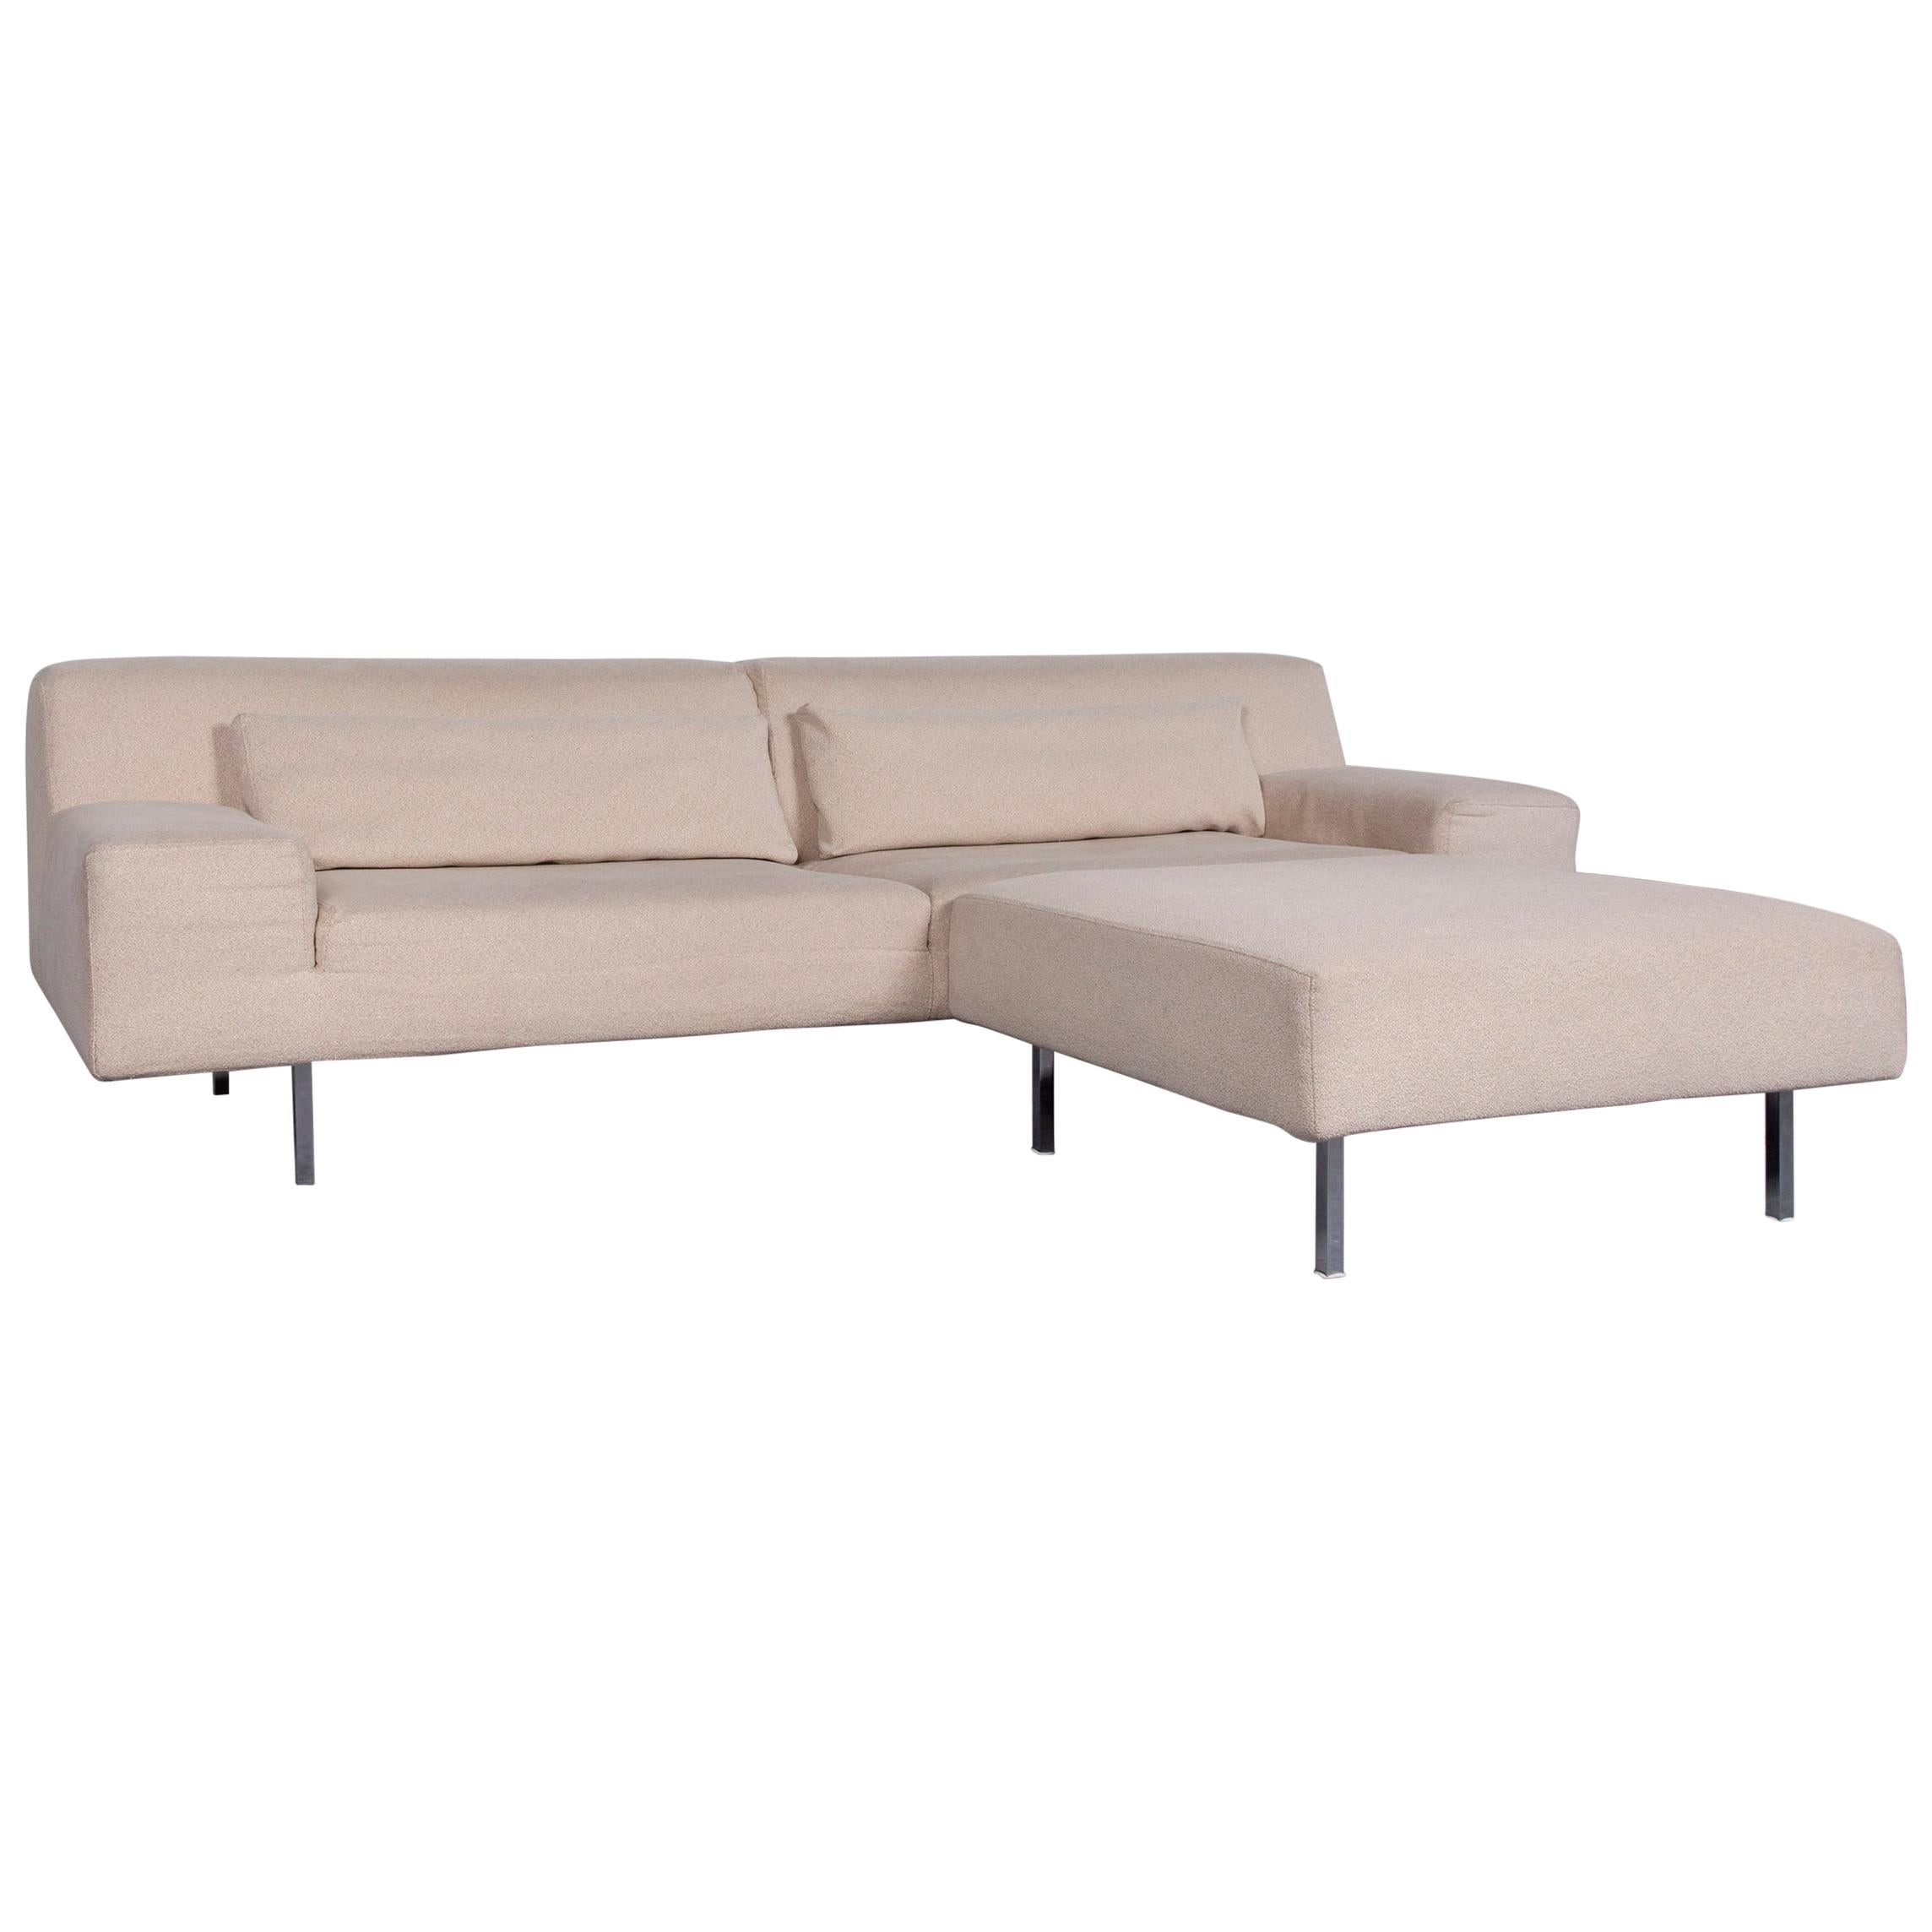 Molteni Designer Fabric Sofa Footstool Set Crème Three-Seat Couch For Sale